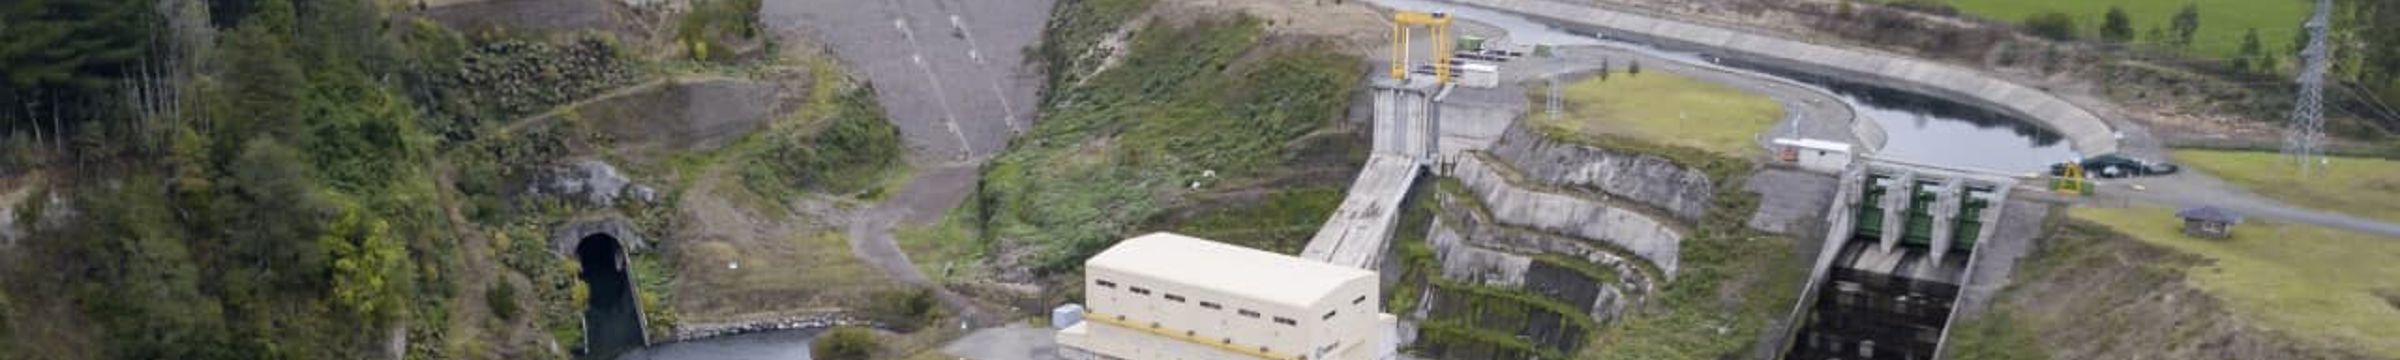 Vista aérea de central hidroeléctrica Rucatayo deStatkraft